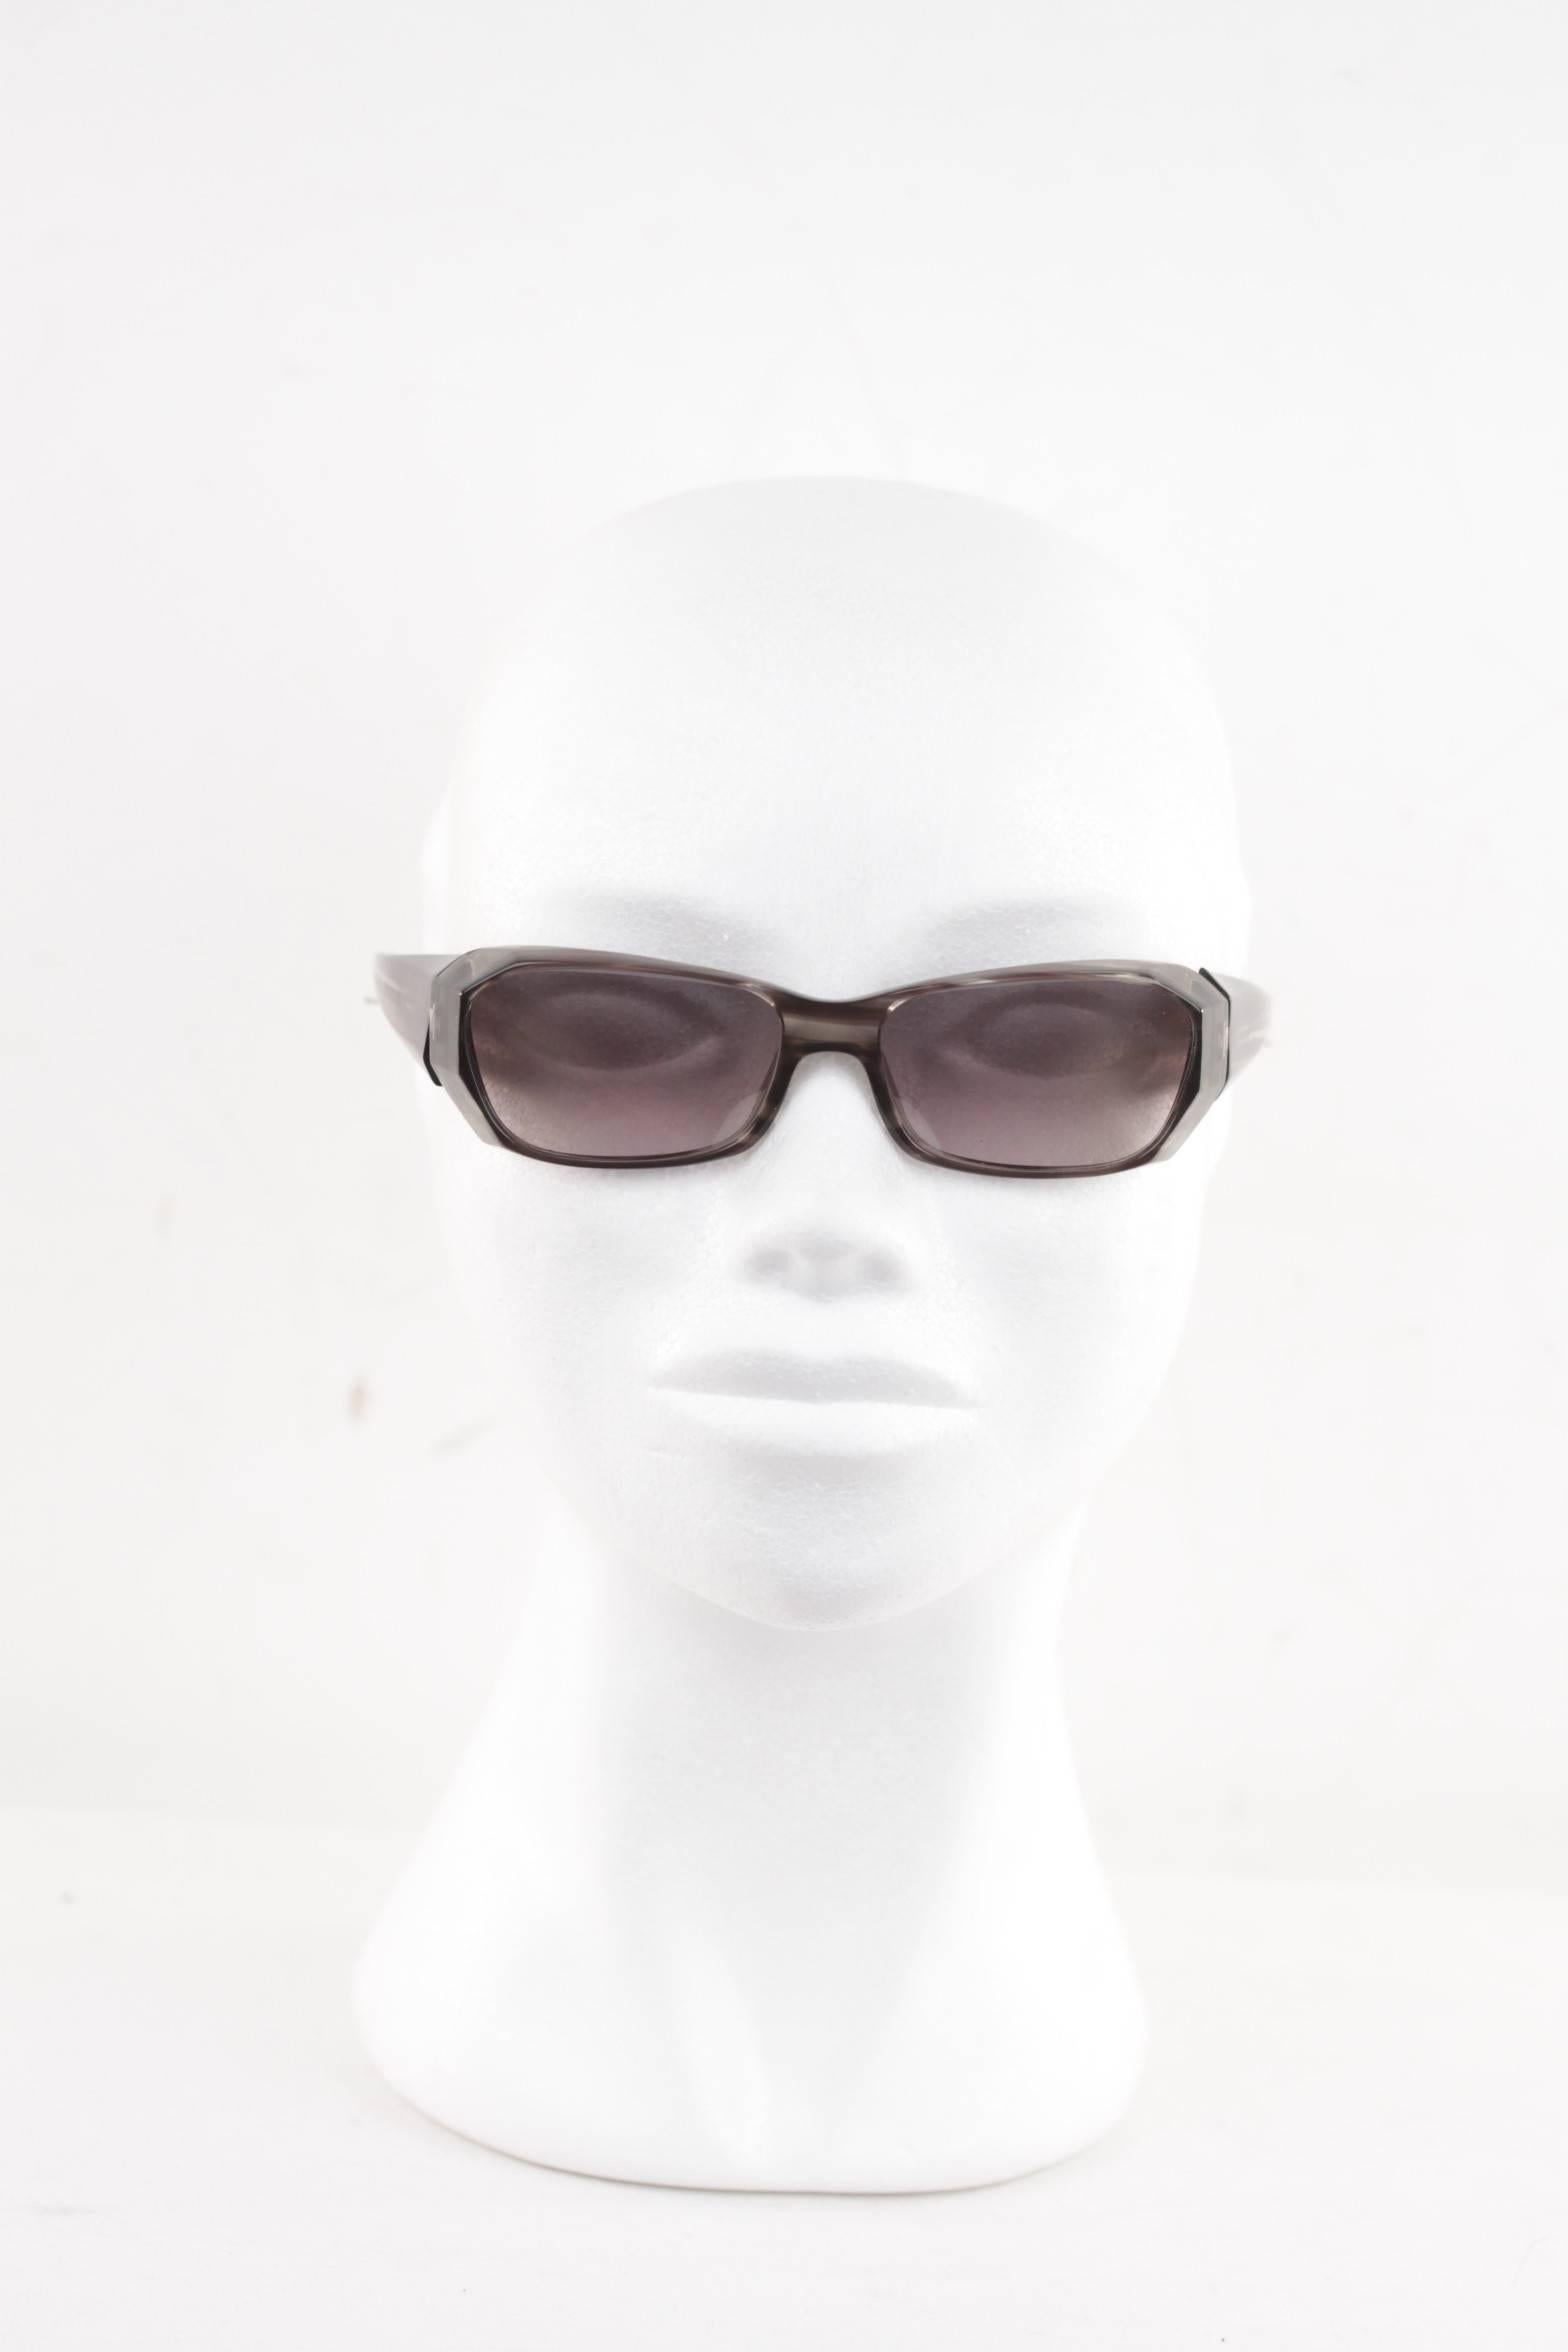 ALAIN MIKLI paris vintage sunglasses A0323-03 gray frame EYEWEAR w/CASE 4